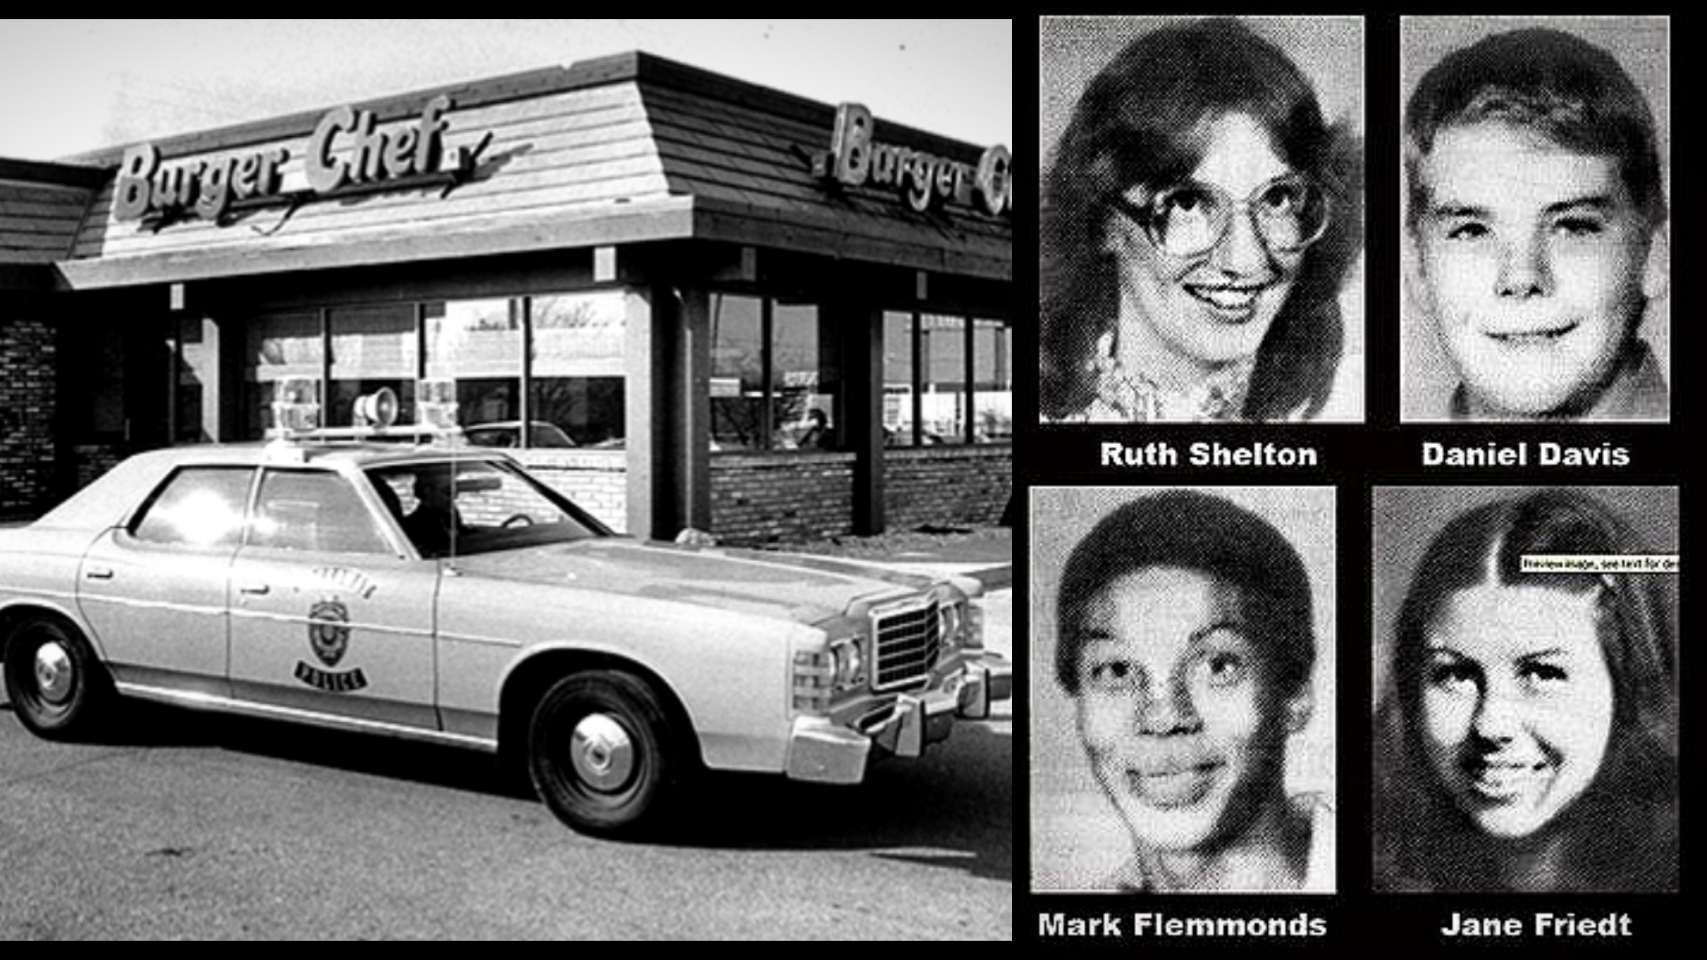 Les meurtres du chef Burger - Speedway, Indiana